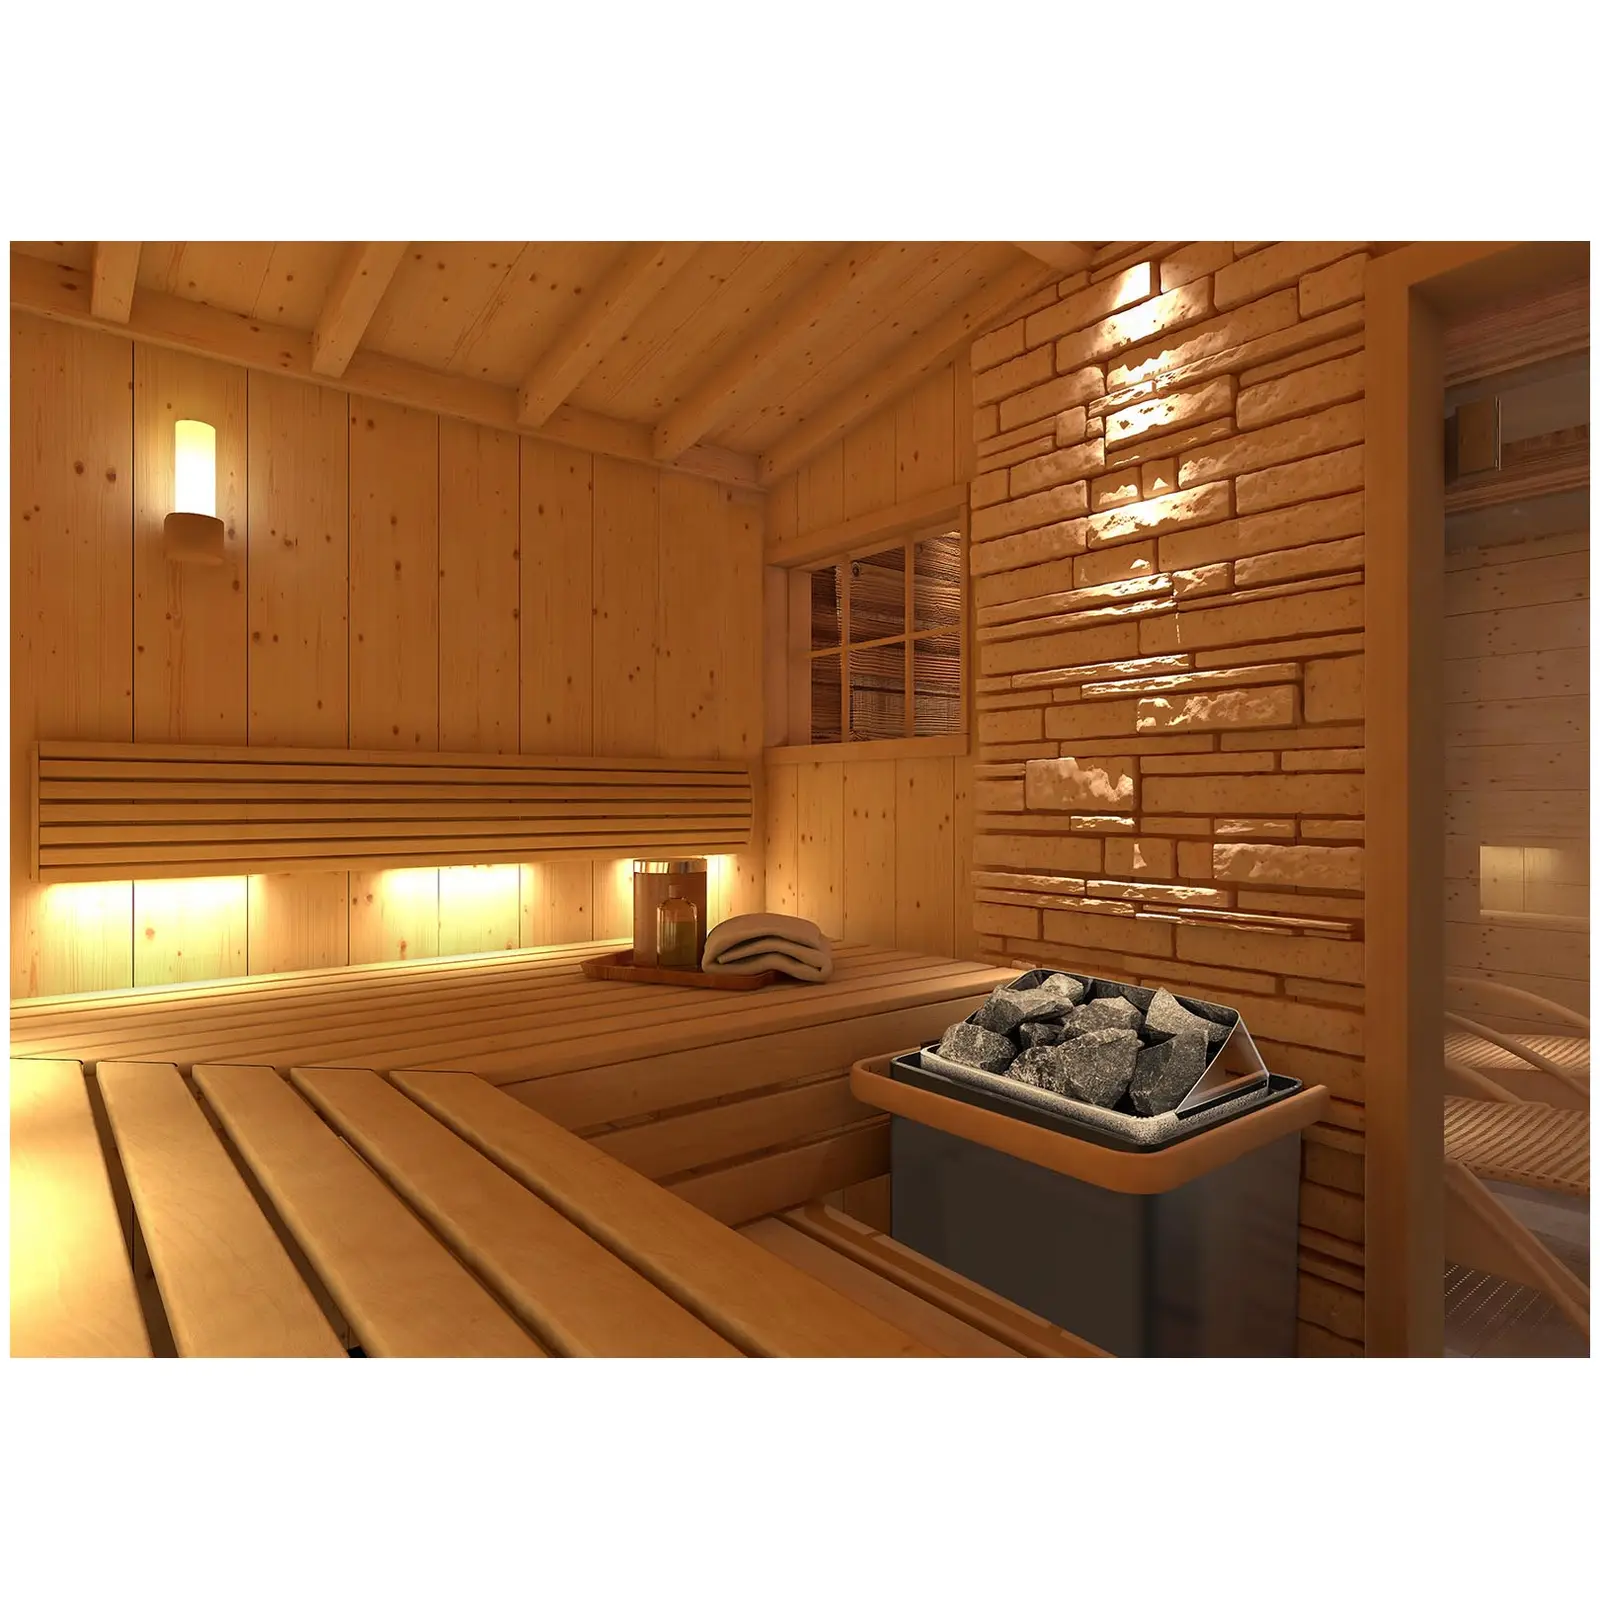 Aquecedor para sauna - elétrico - 8 kW